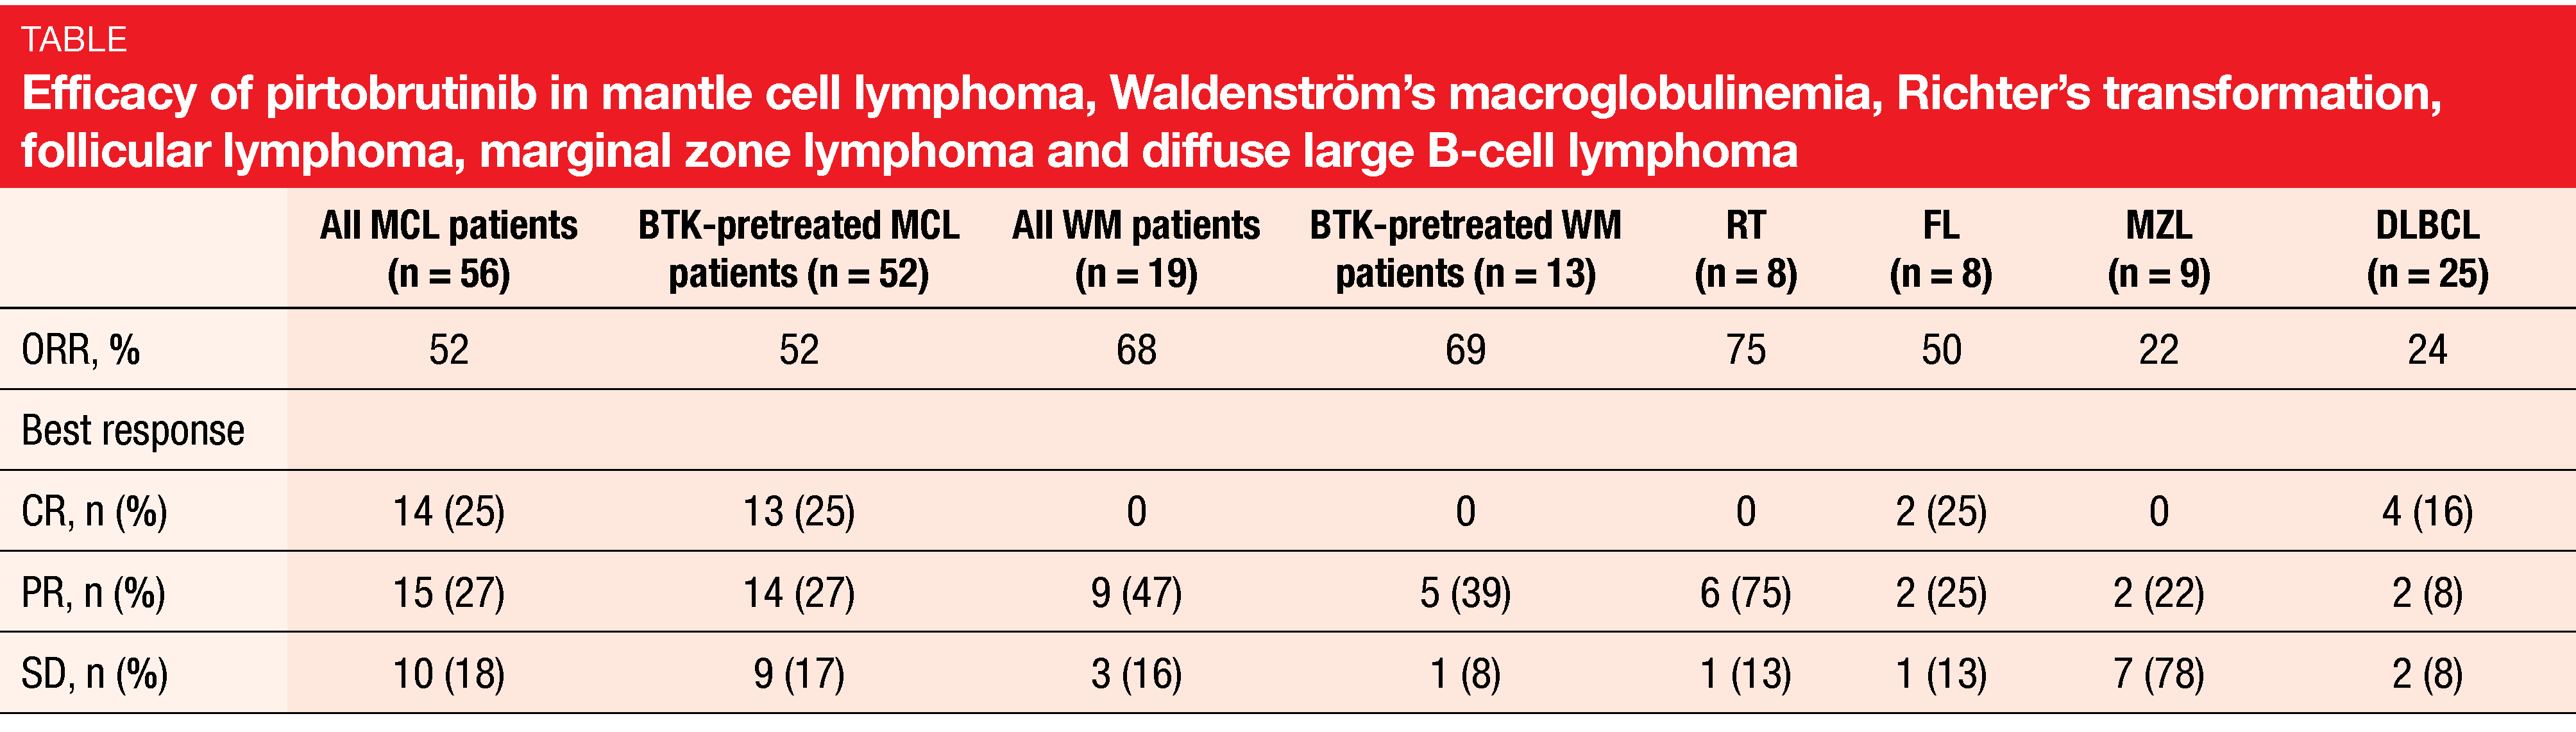 Table Efficacy of pirtobrutinib in mantle cell lymphoma, Waldenström’s macroglobulinemia, Richter’s transformation, follicular lymphoma, marginal zone lymphoma and diffuse large B-cell lymphoma